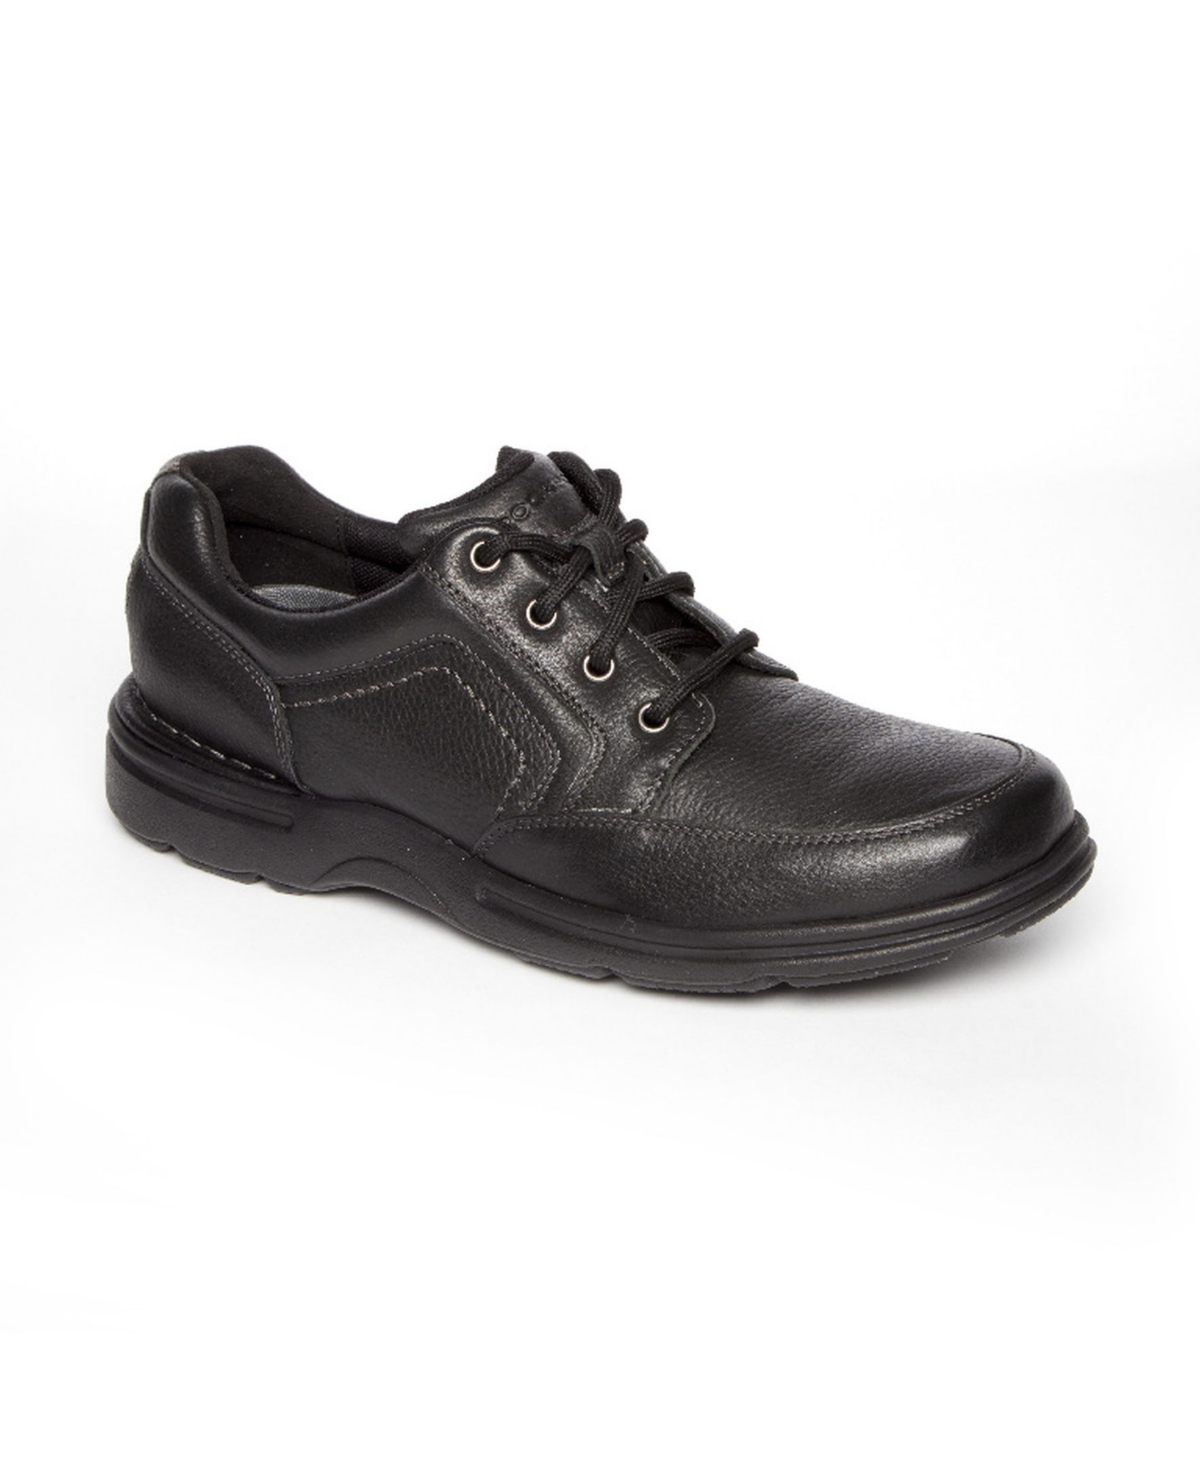 Men's Eureka Plus Mudguard Shoes - Black